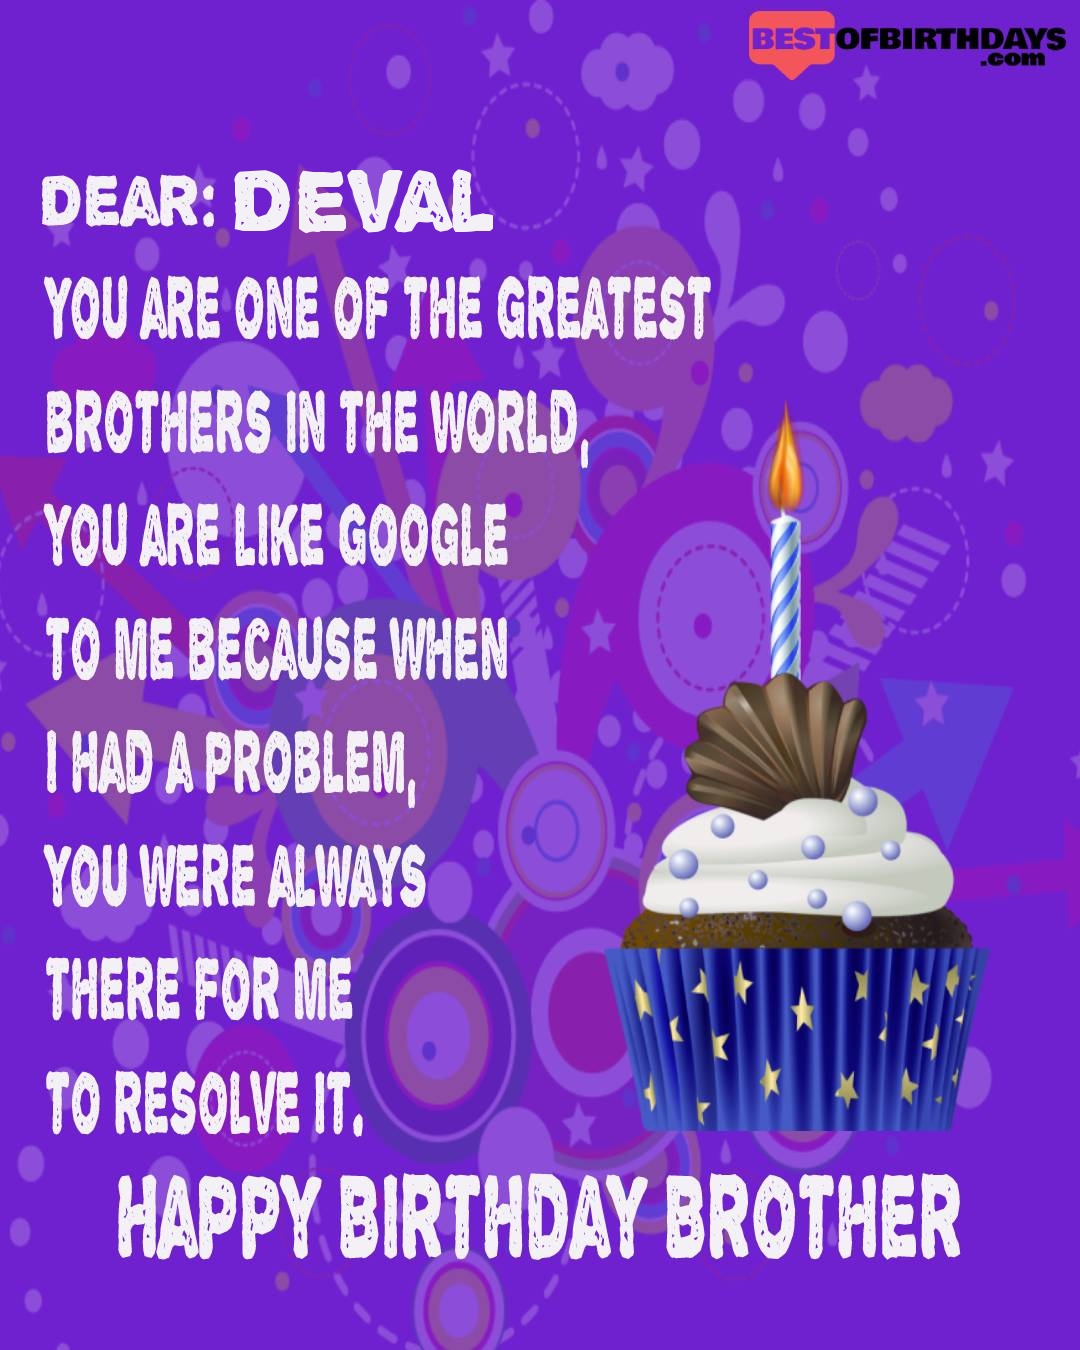 Happy birthday deval bhai brother bro